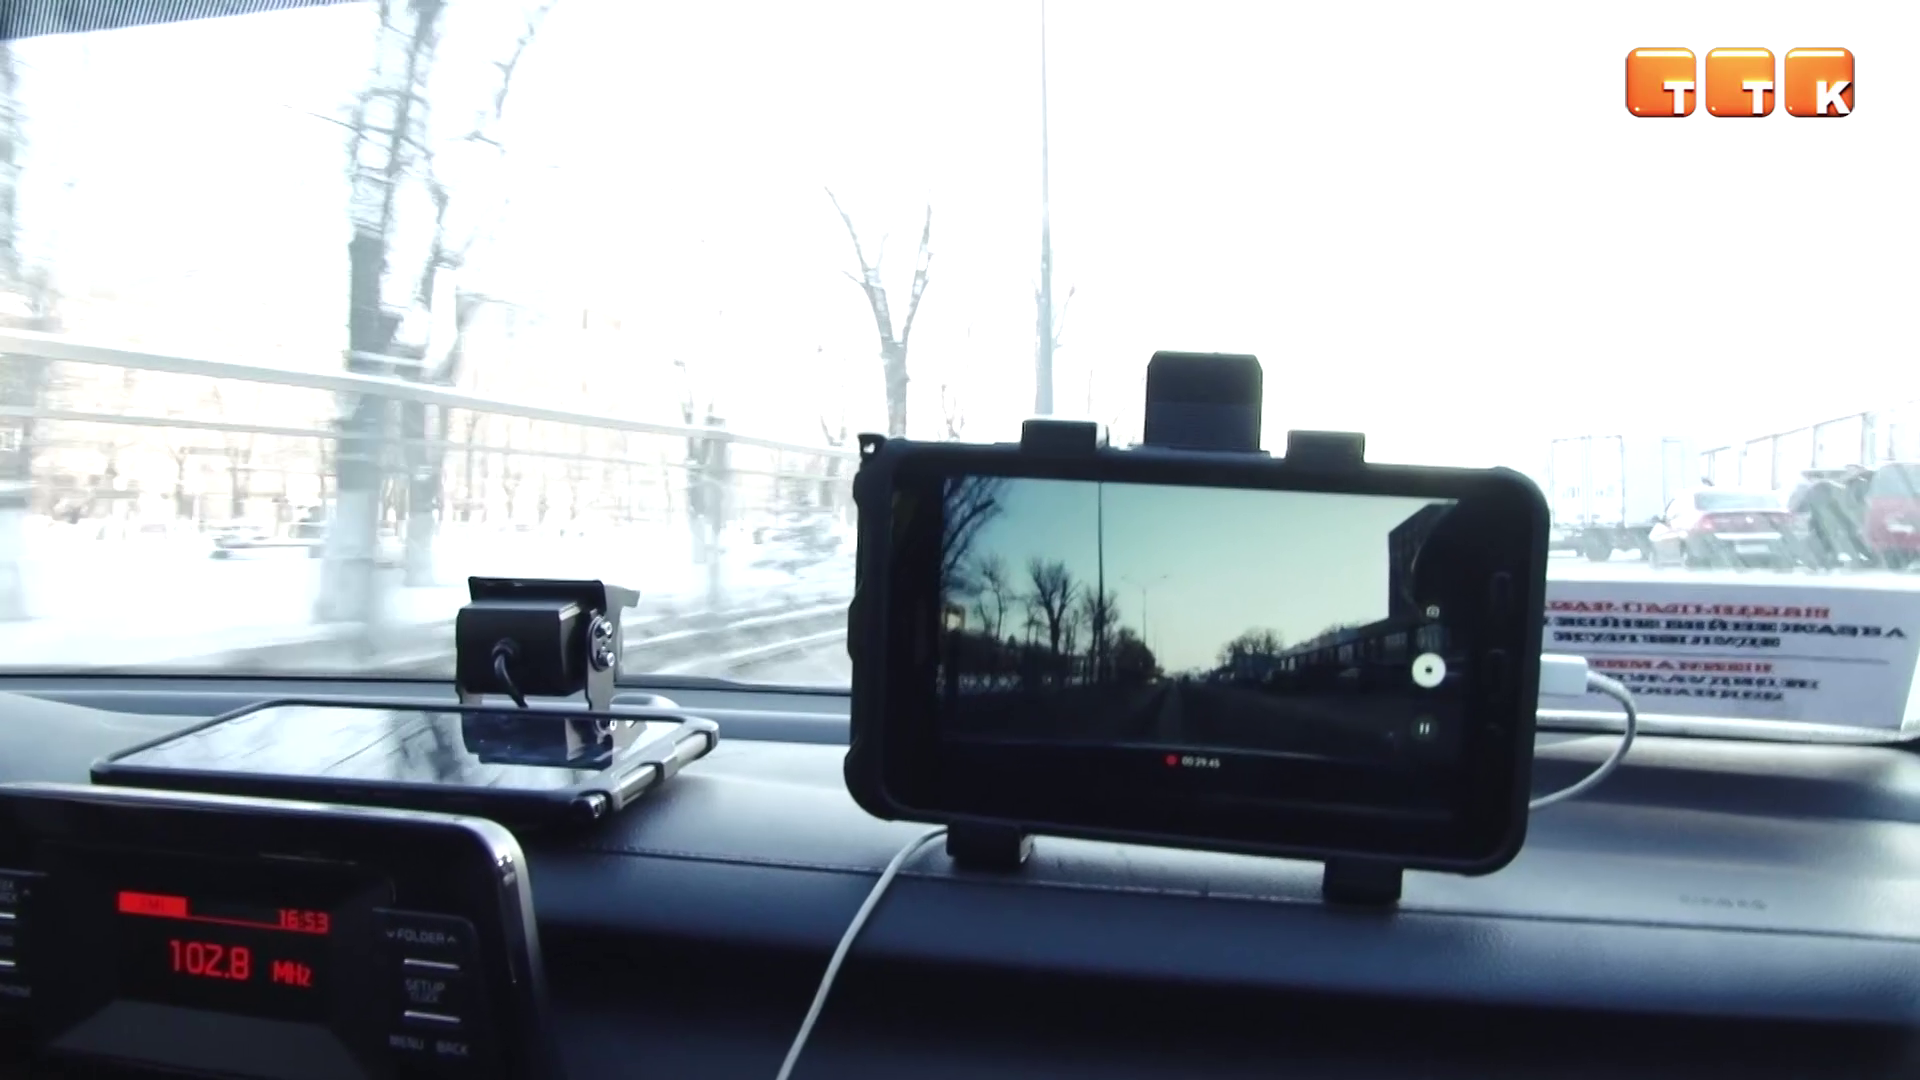 173 камеры видеонаблюдения следят за темиртаускими водителями